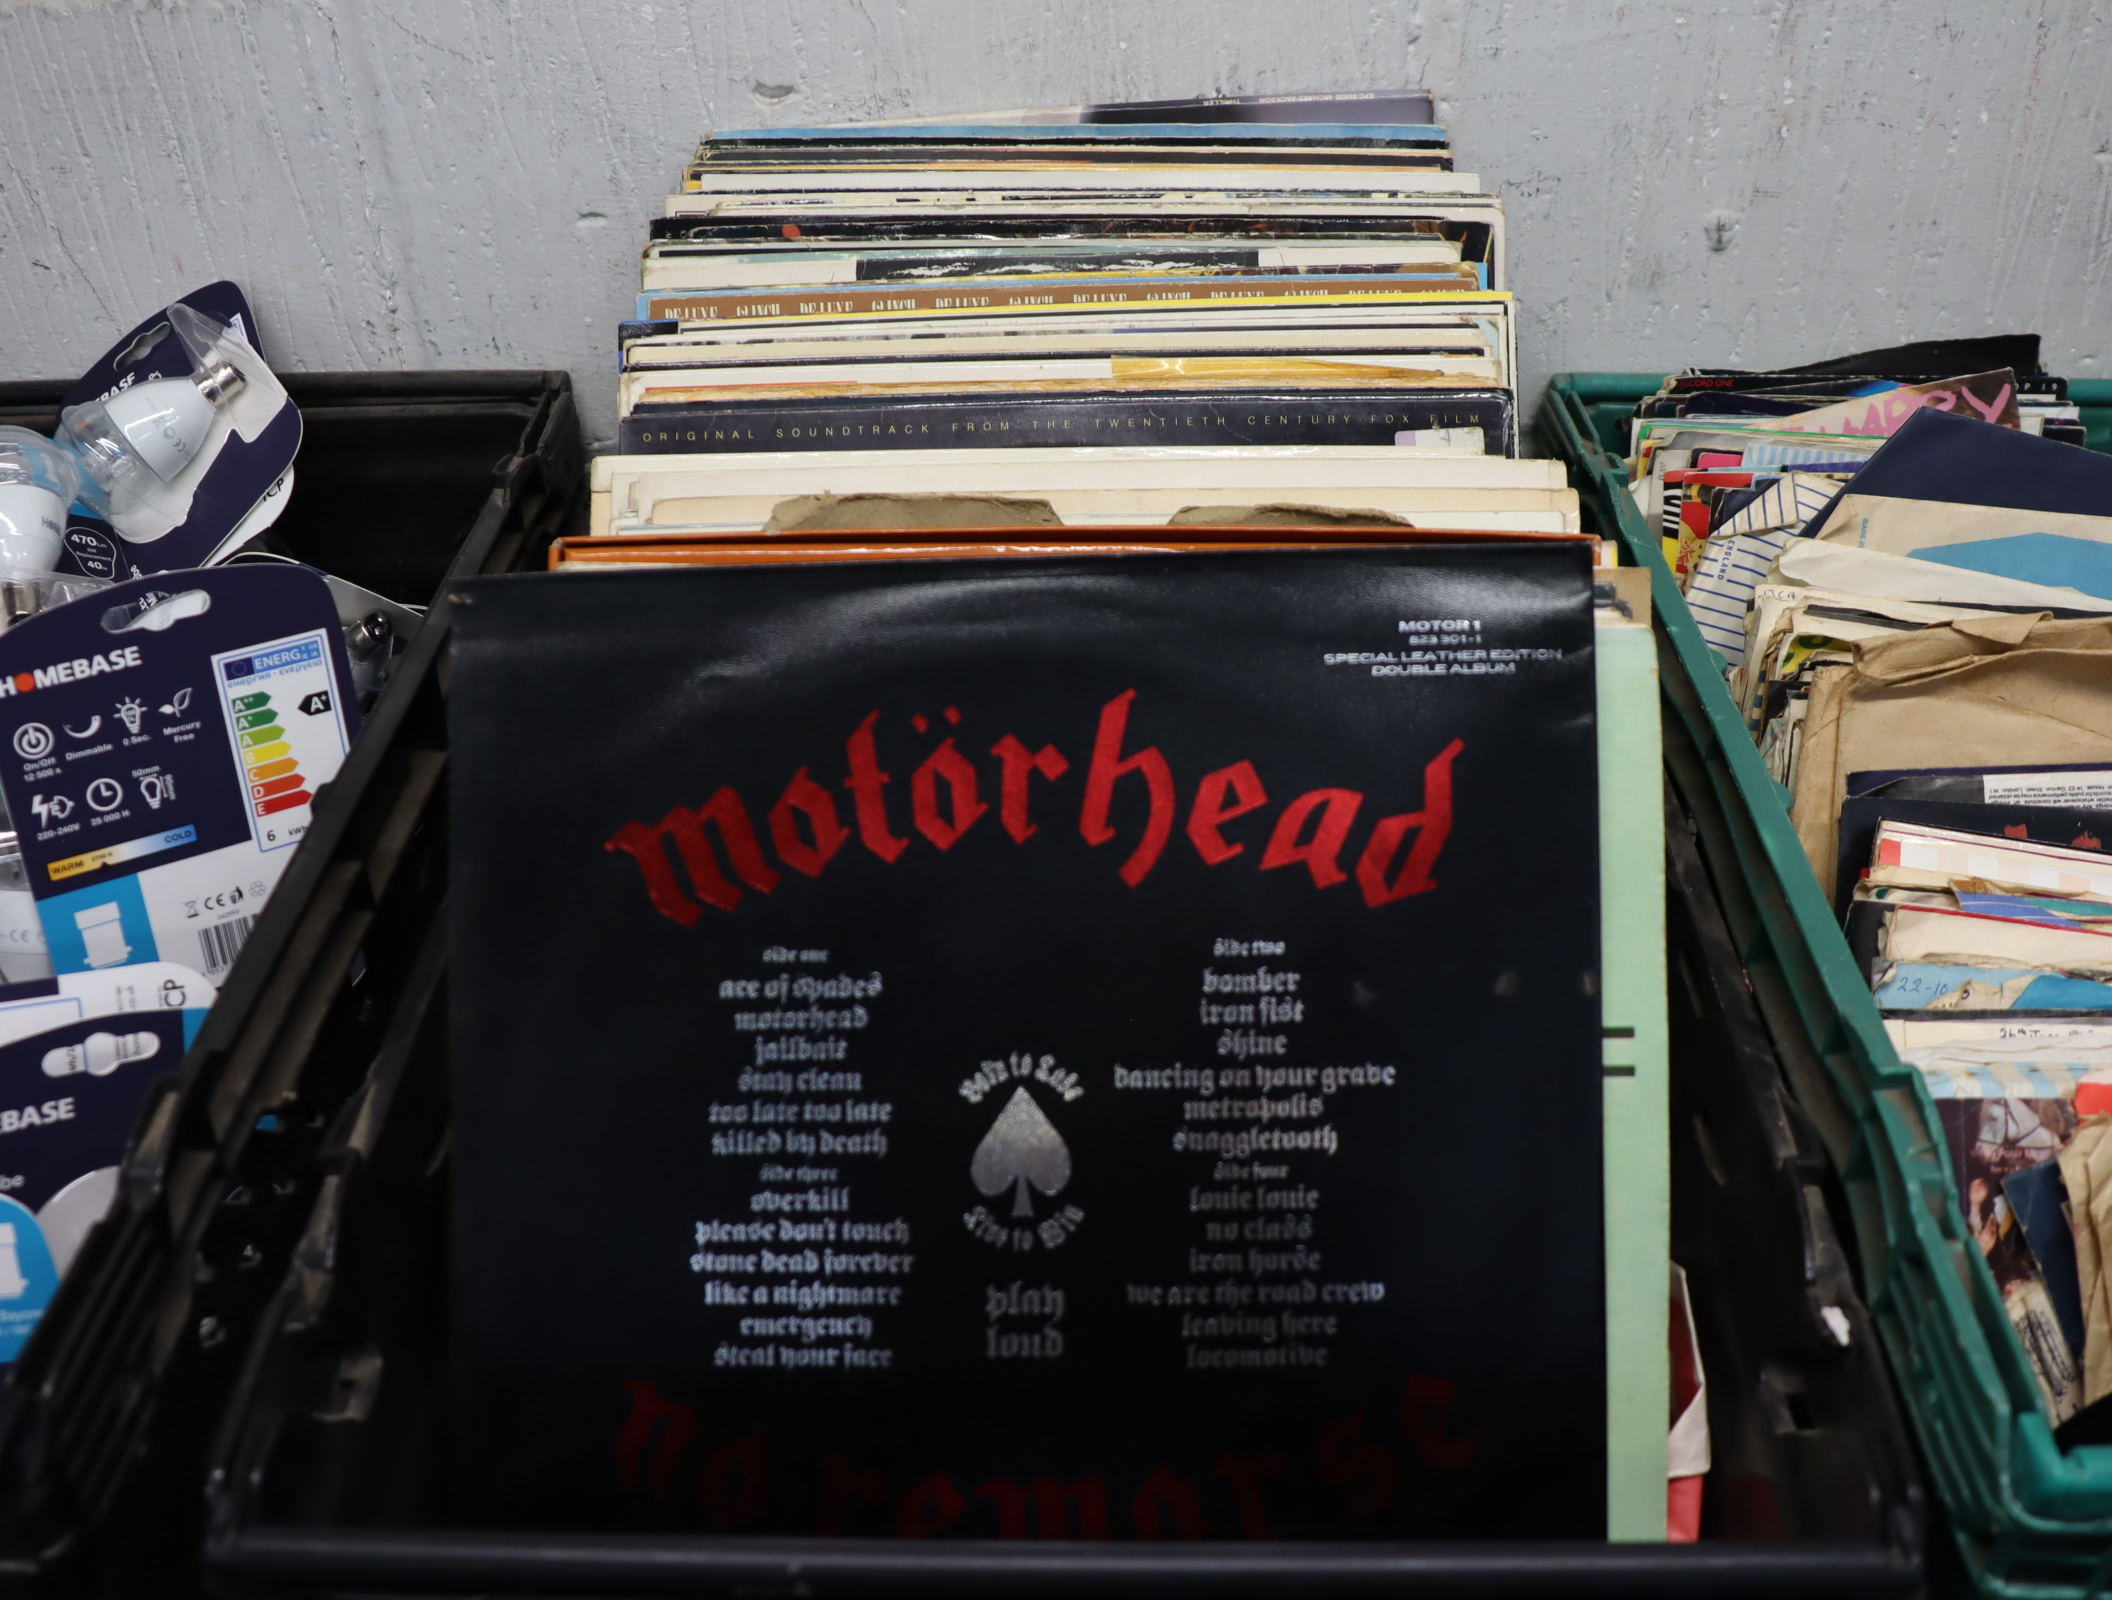 Crate of vinyl records incl. Motor Head, Neil Diamond, Alien soundtrack, Mary Poppins, Elvis, etc.